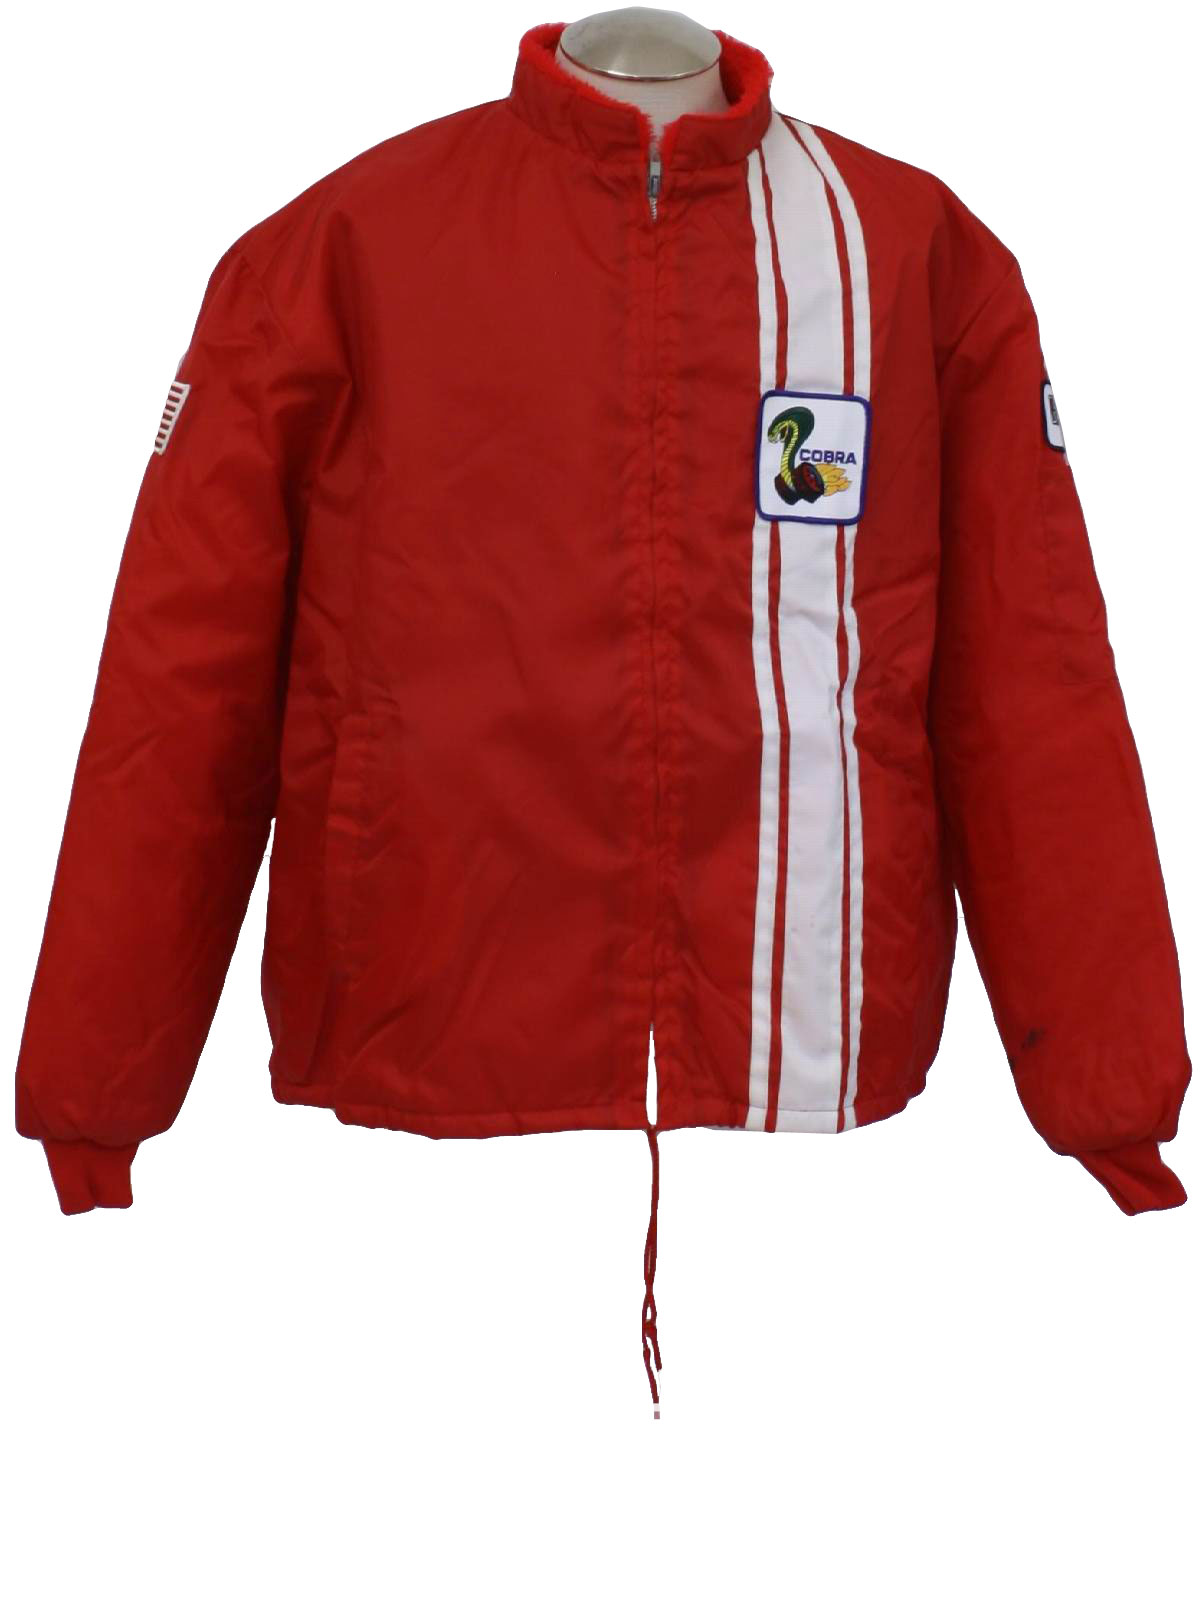 Red ford cobra jacket #7